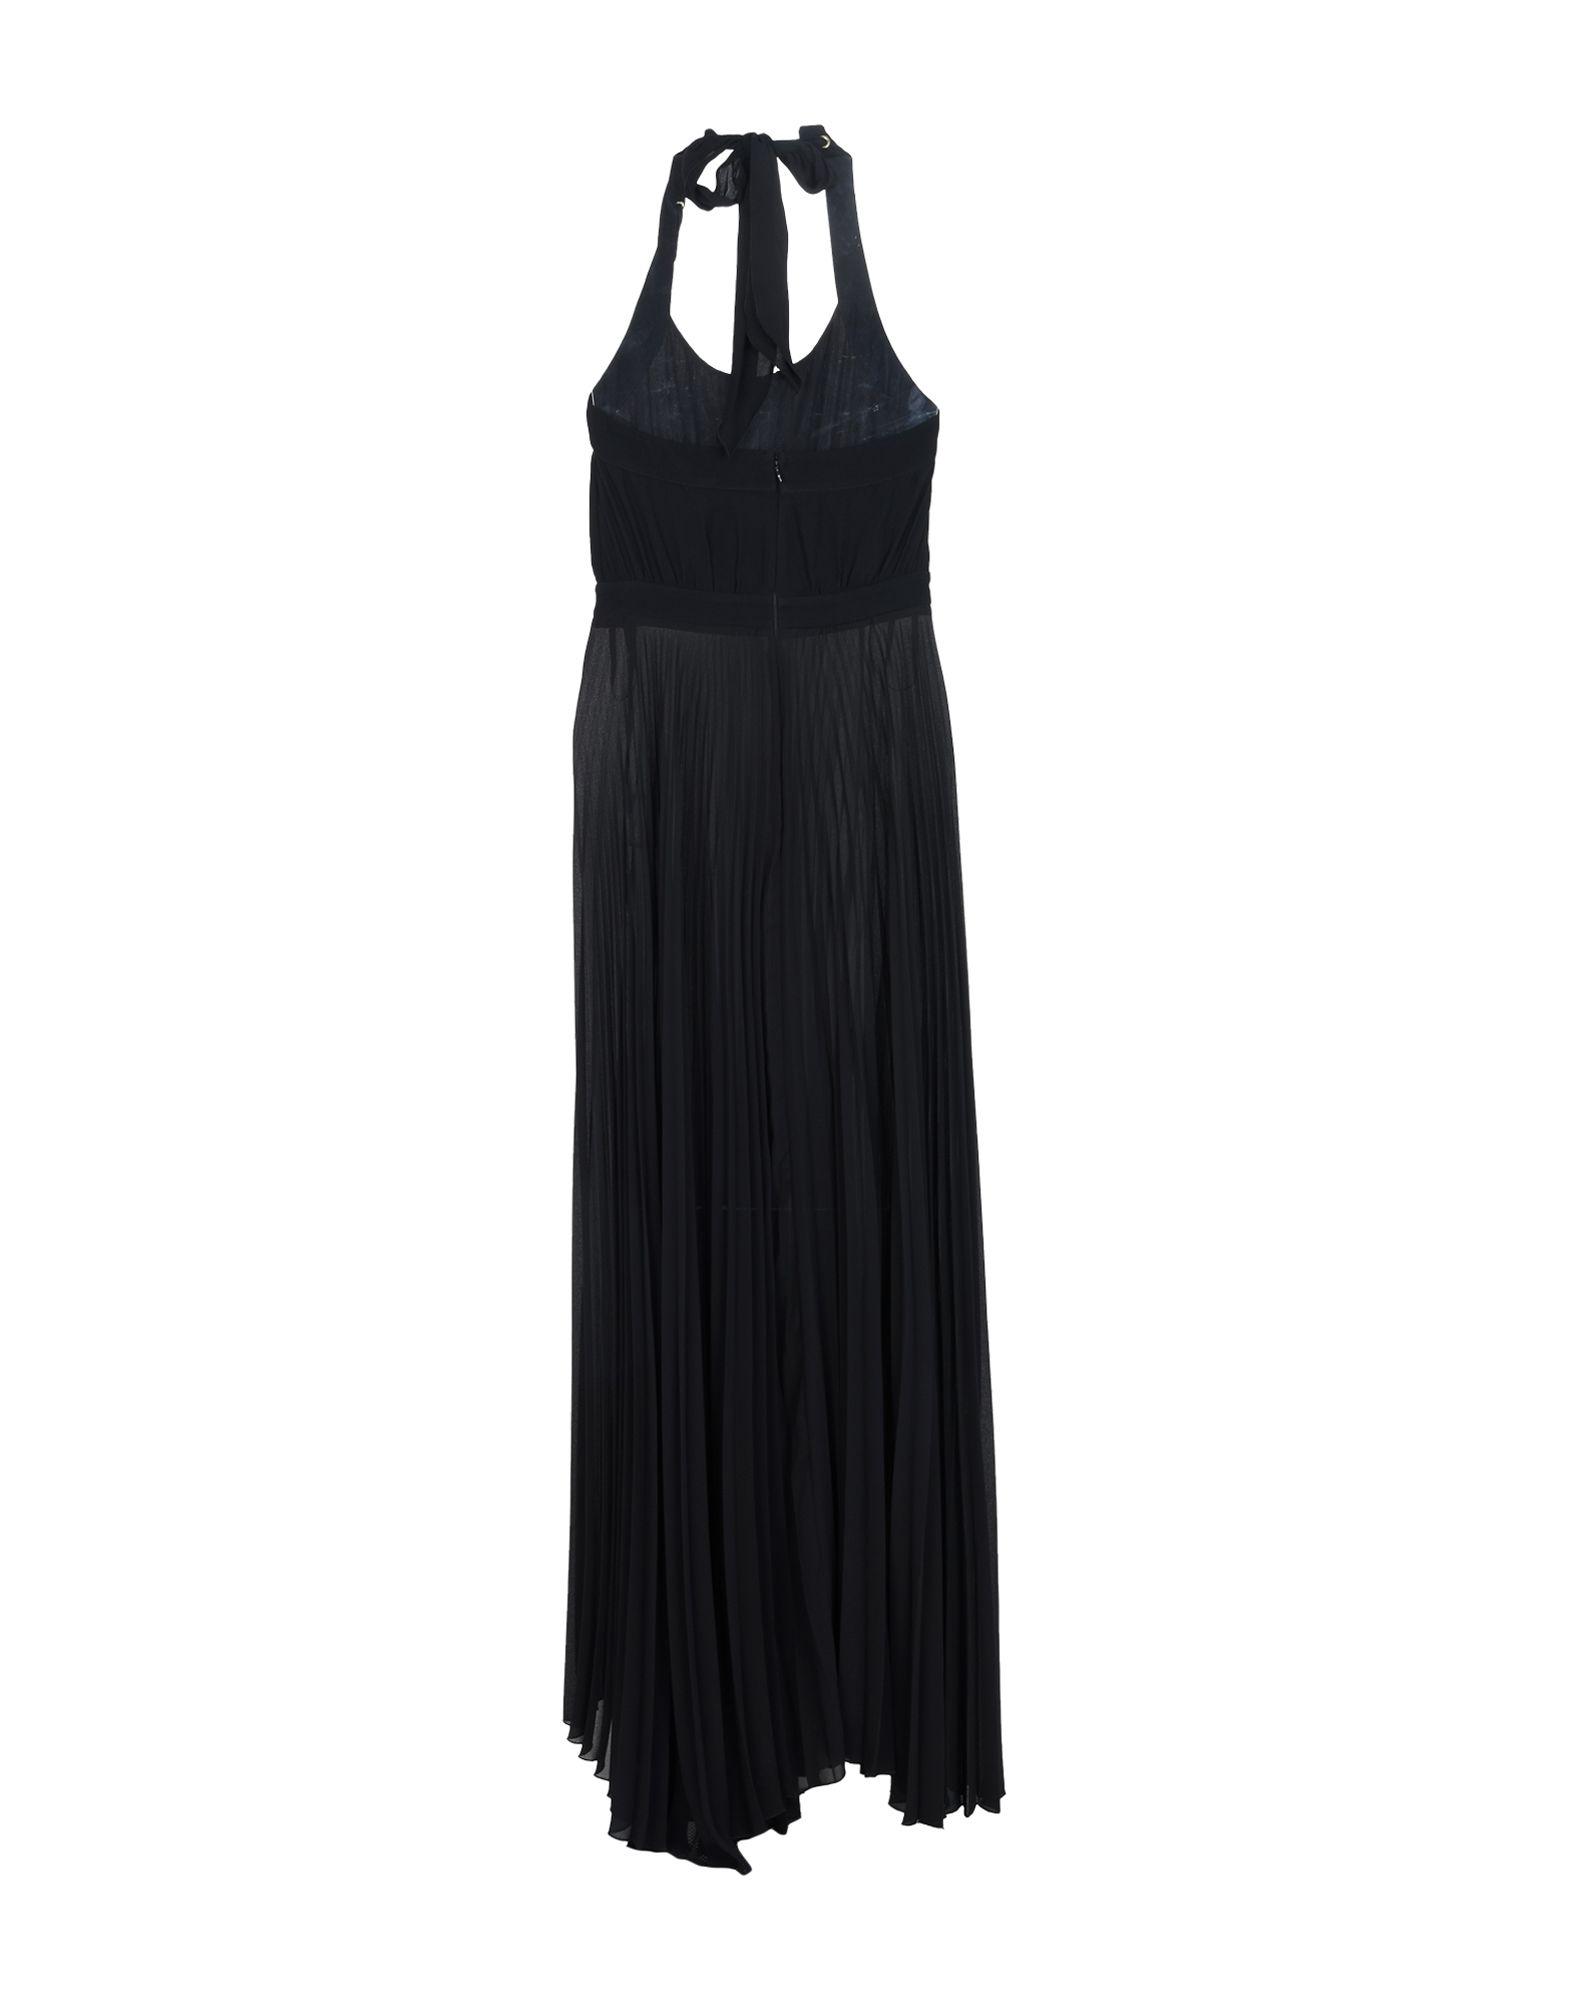 Elisabetta Franchi Synthetic Long Dress in Black - Lyst